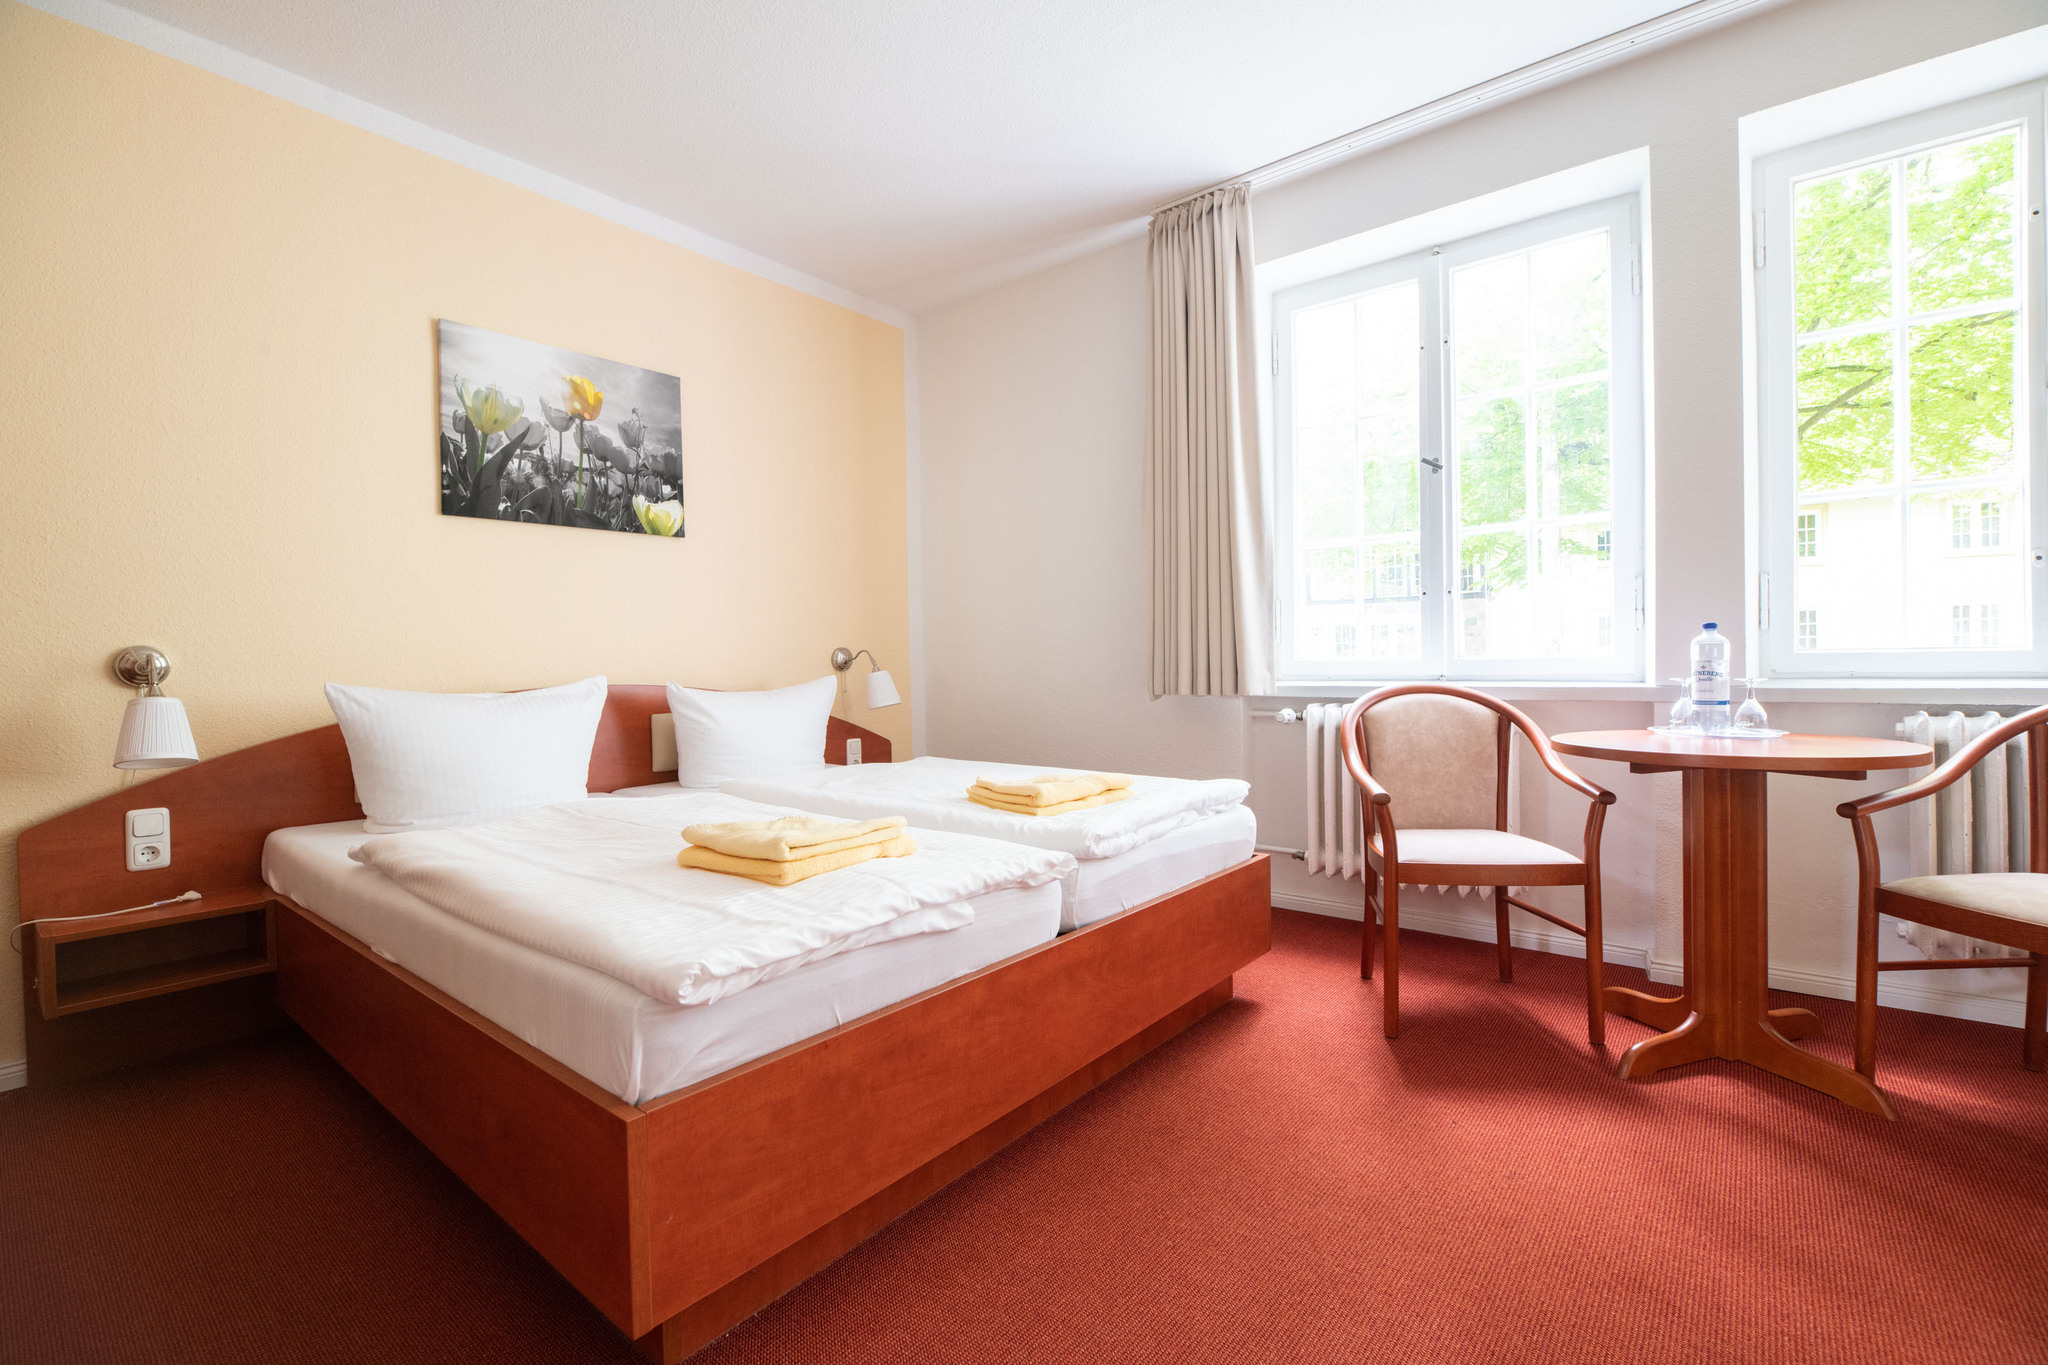 Hotelzimmer - ©IdeenGut GmbH & Co. KG